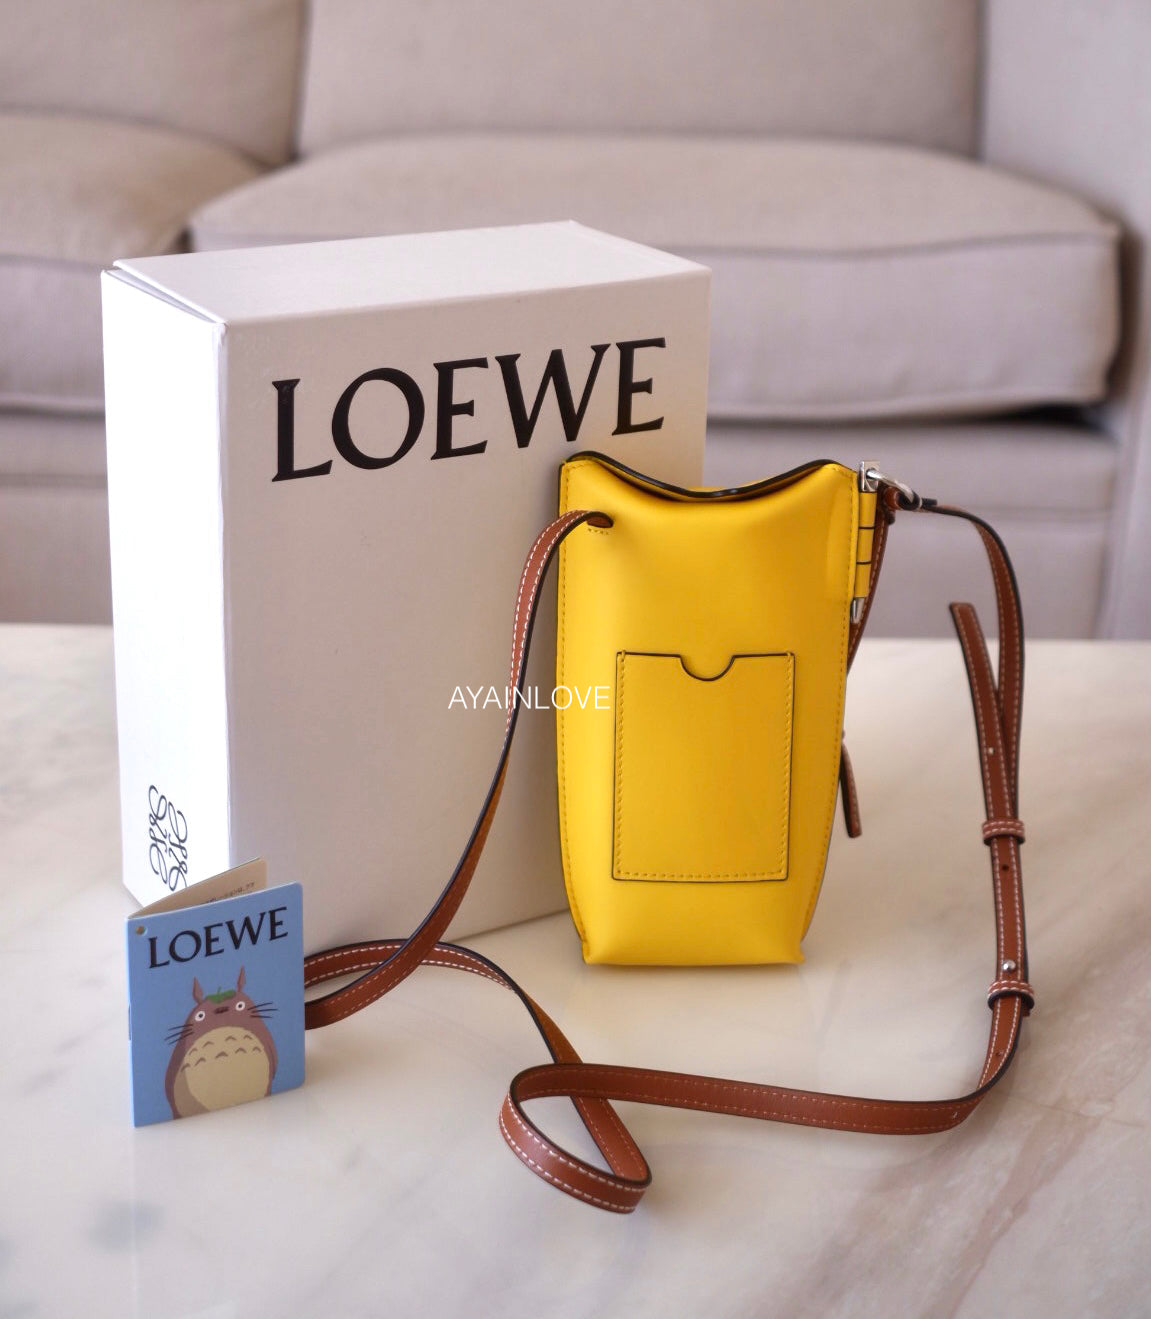 Loewe and my neighbor's collaboration bag Gate pocket New